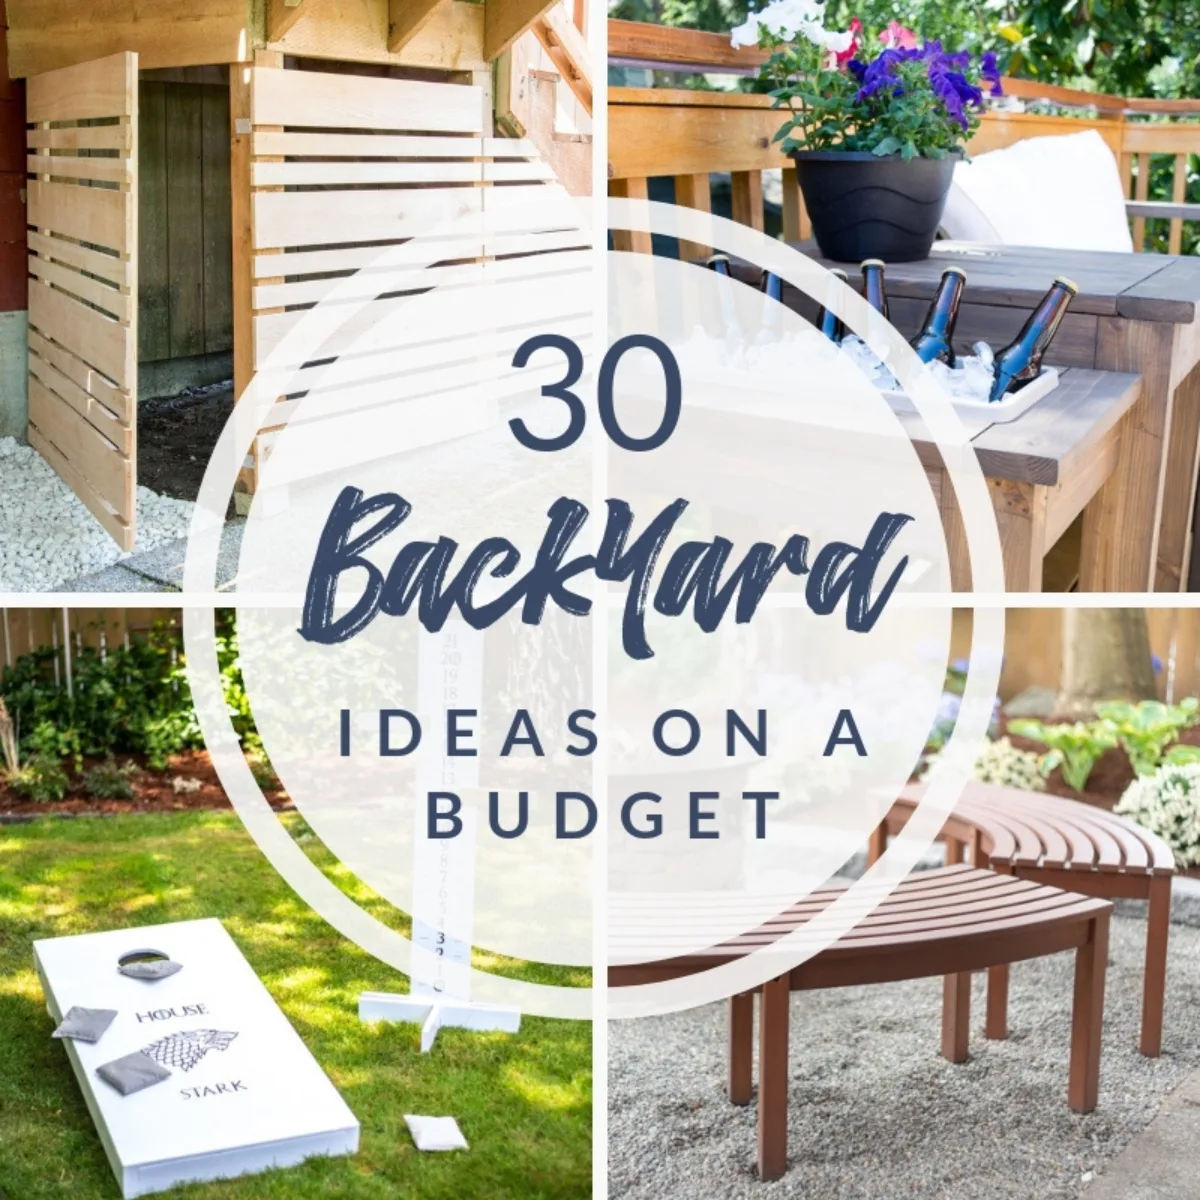 backyard ideas on a budget